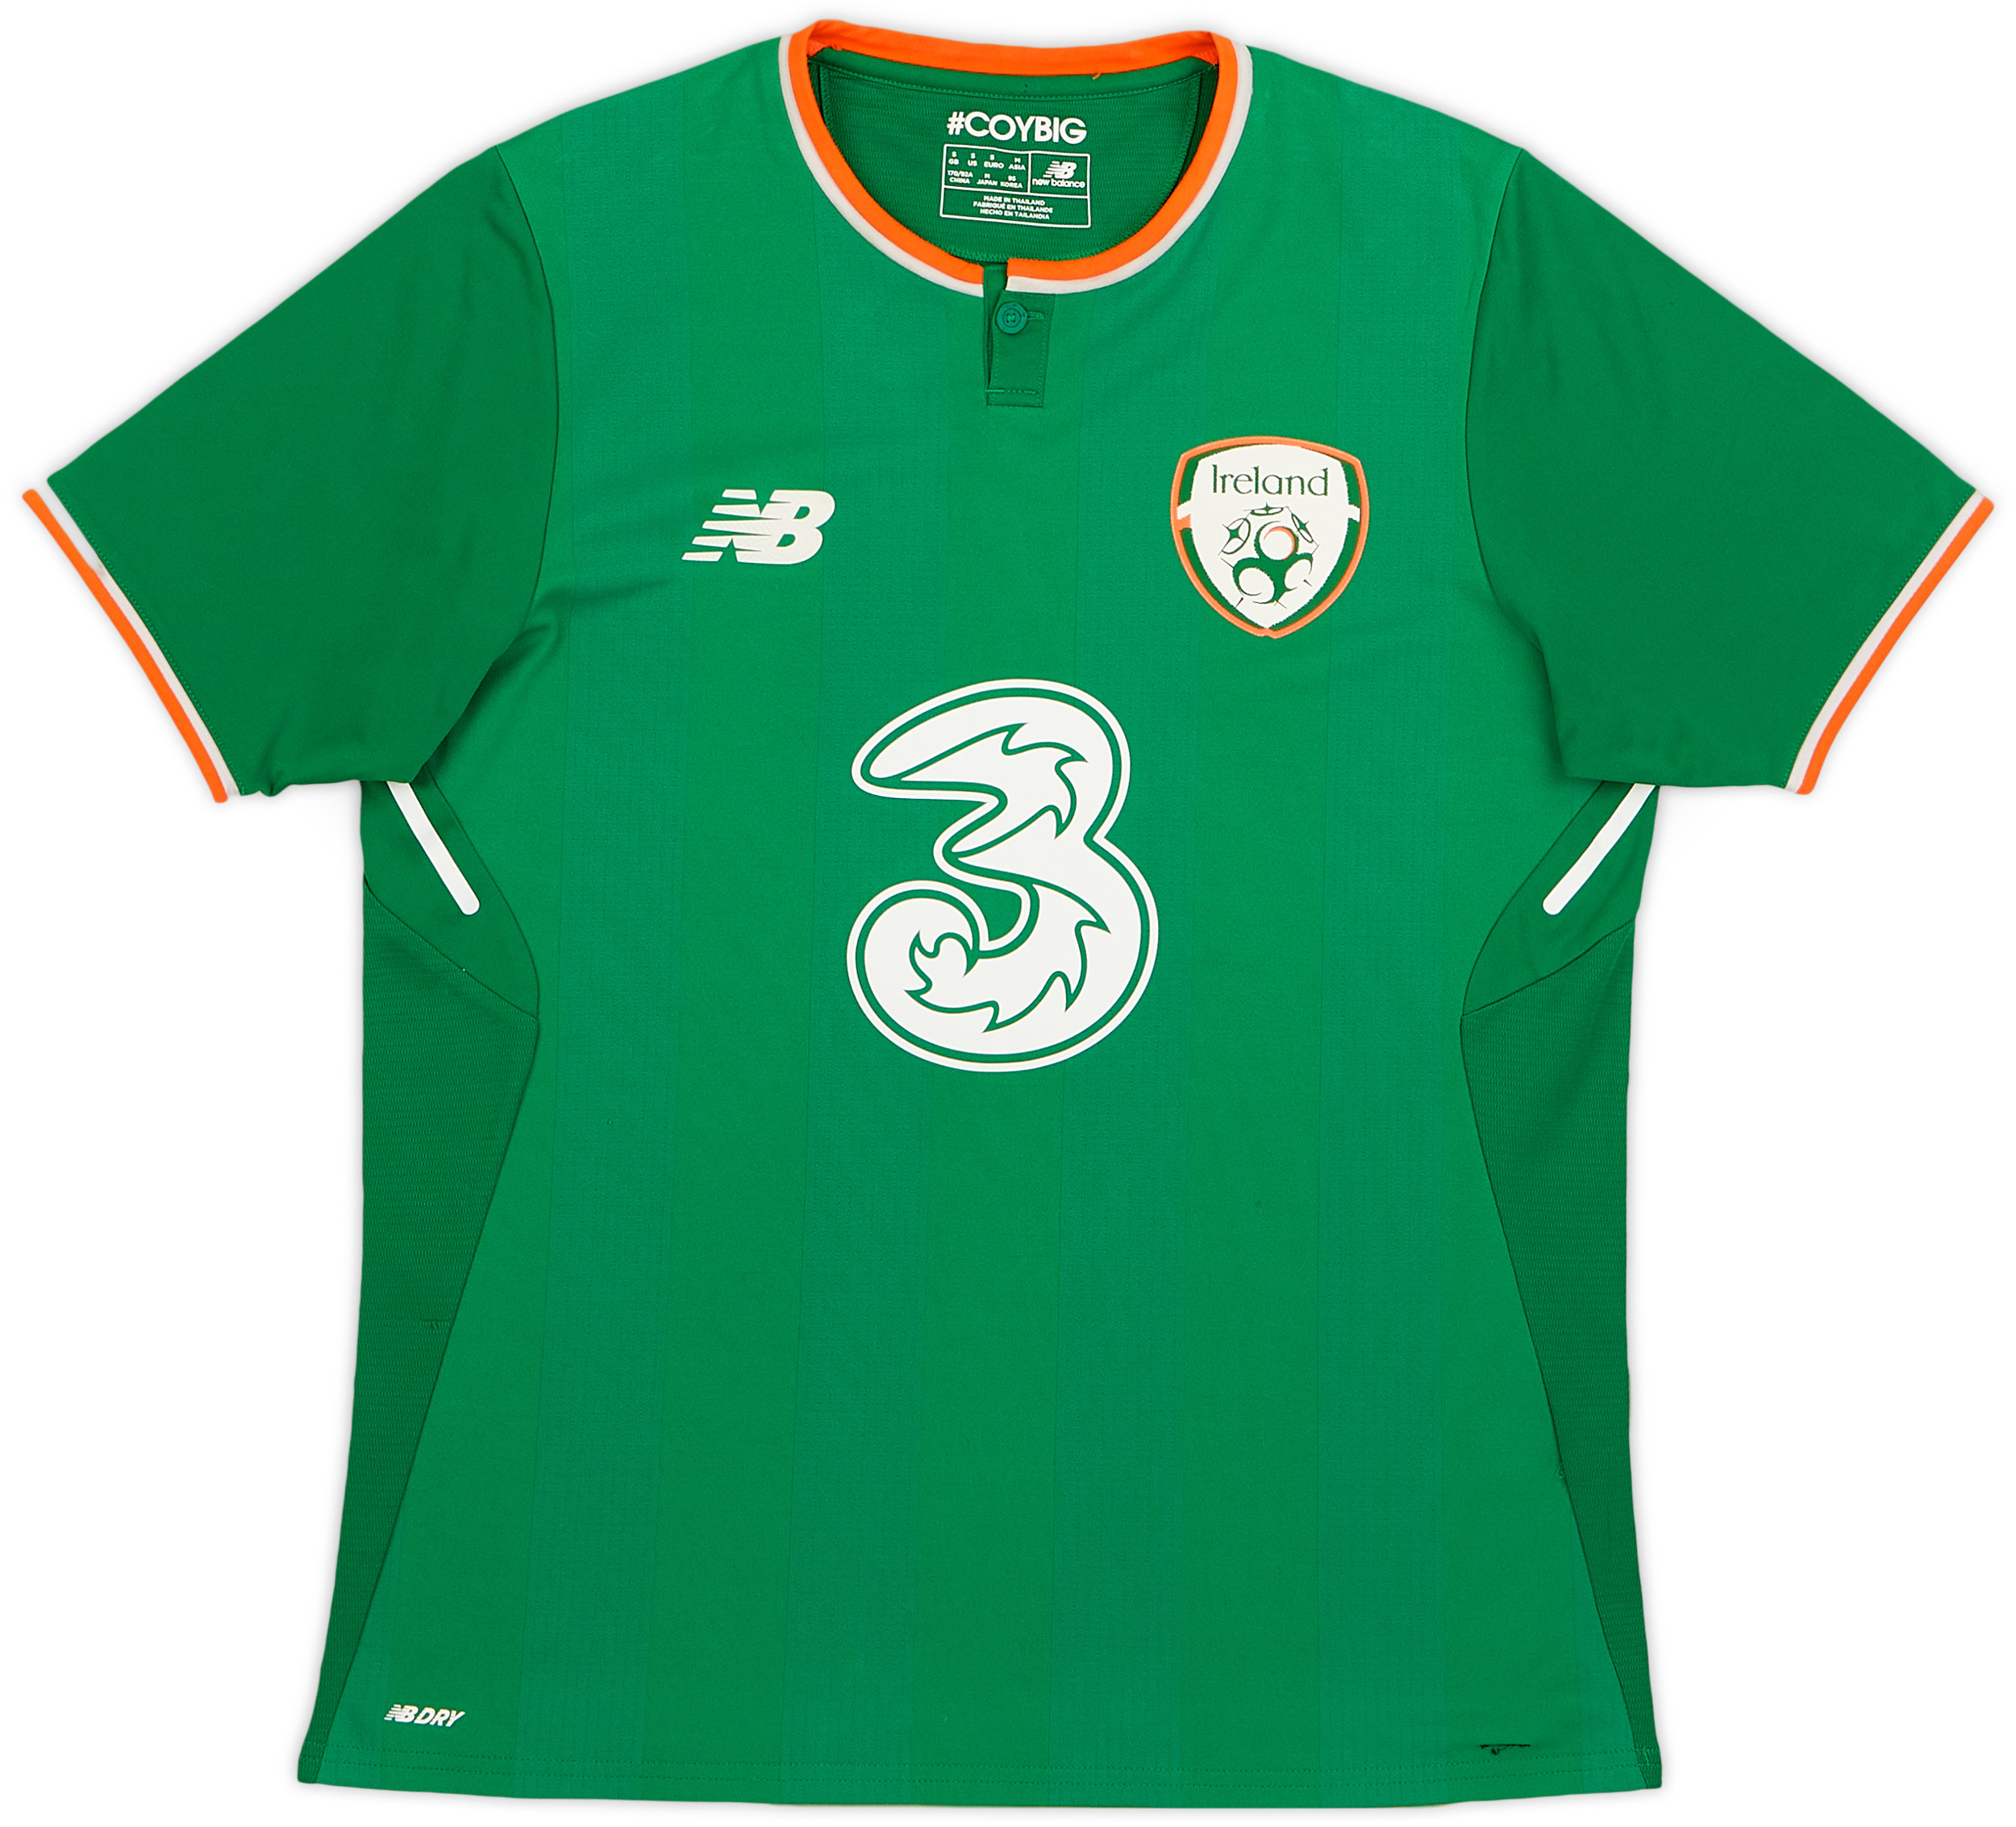 2017-18 Republic of Ireland Home Shirt - 7/10 - ()